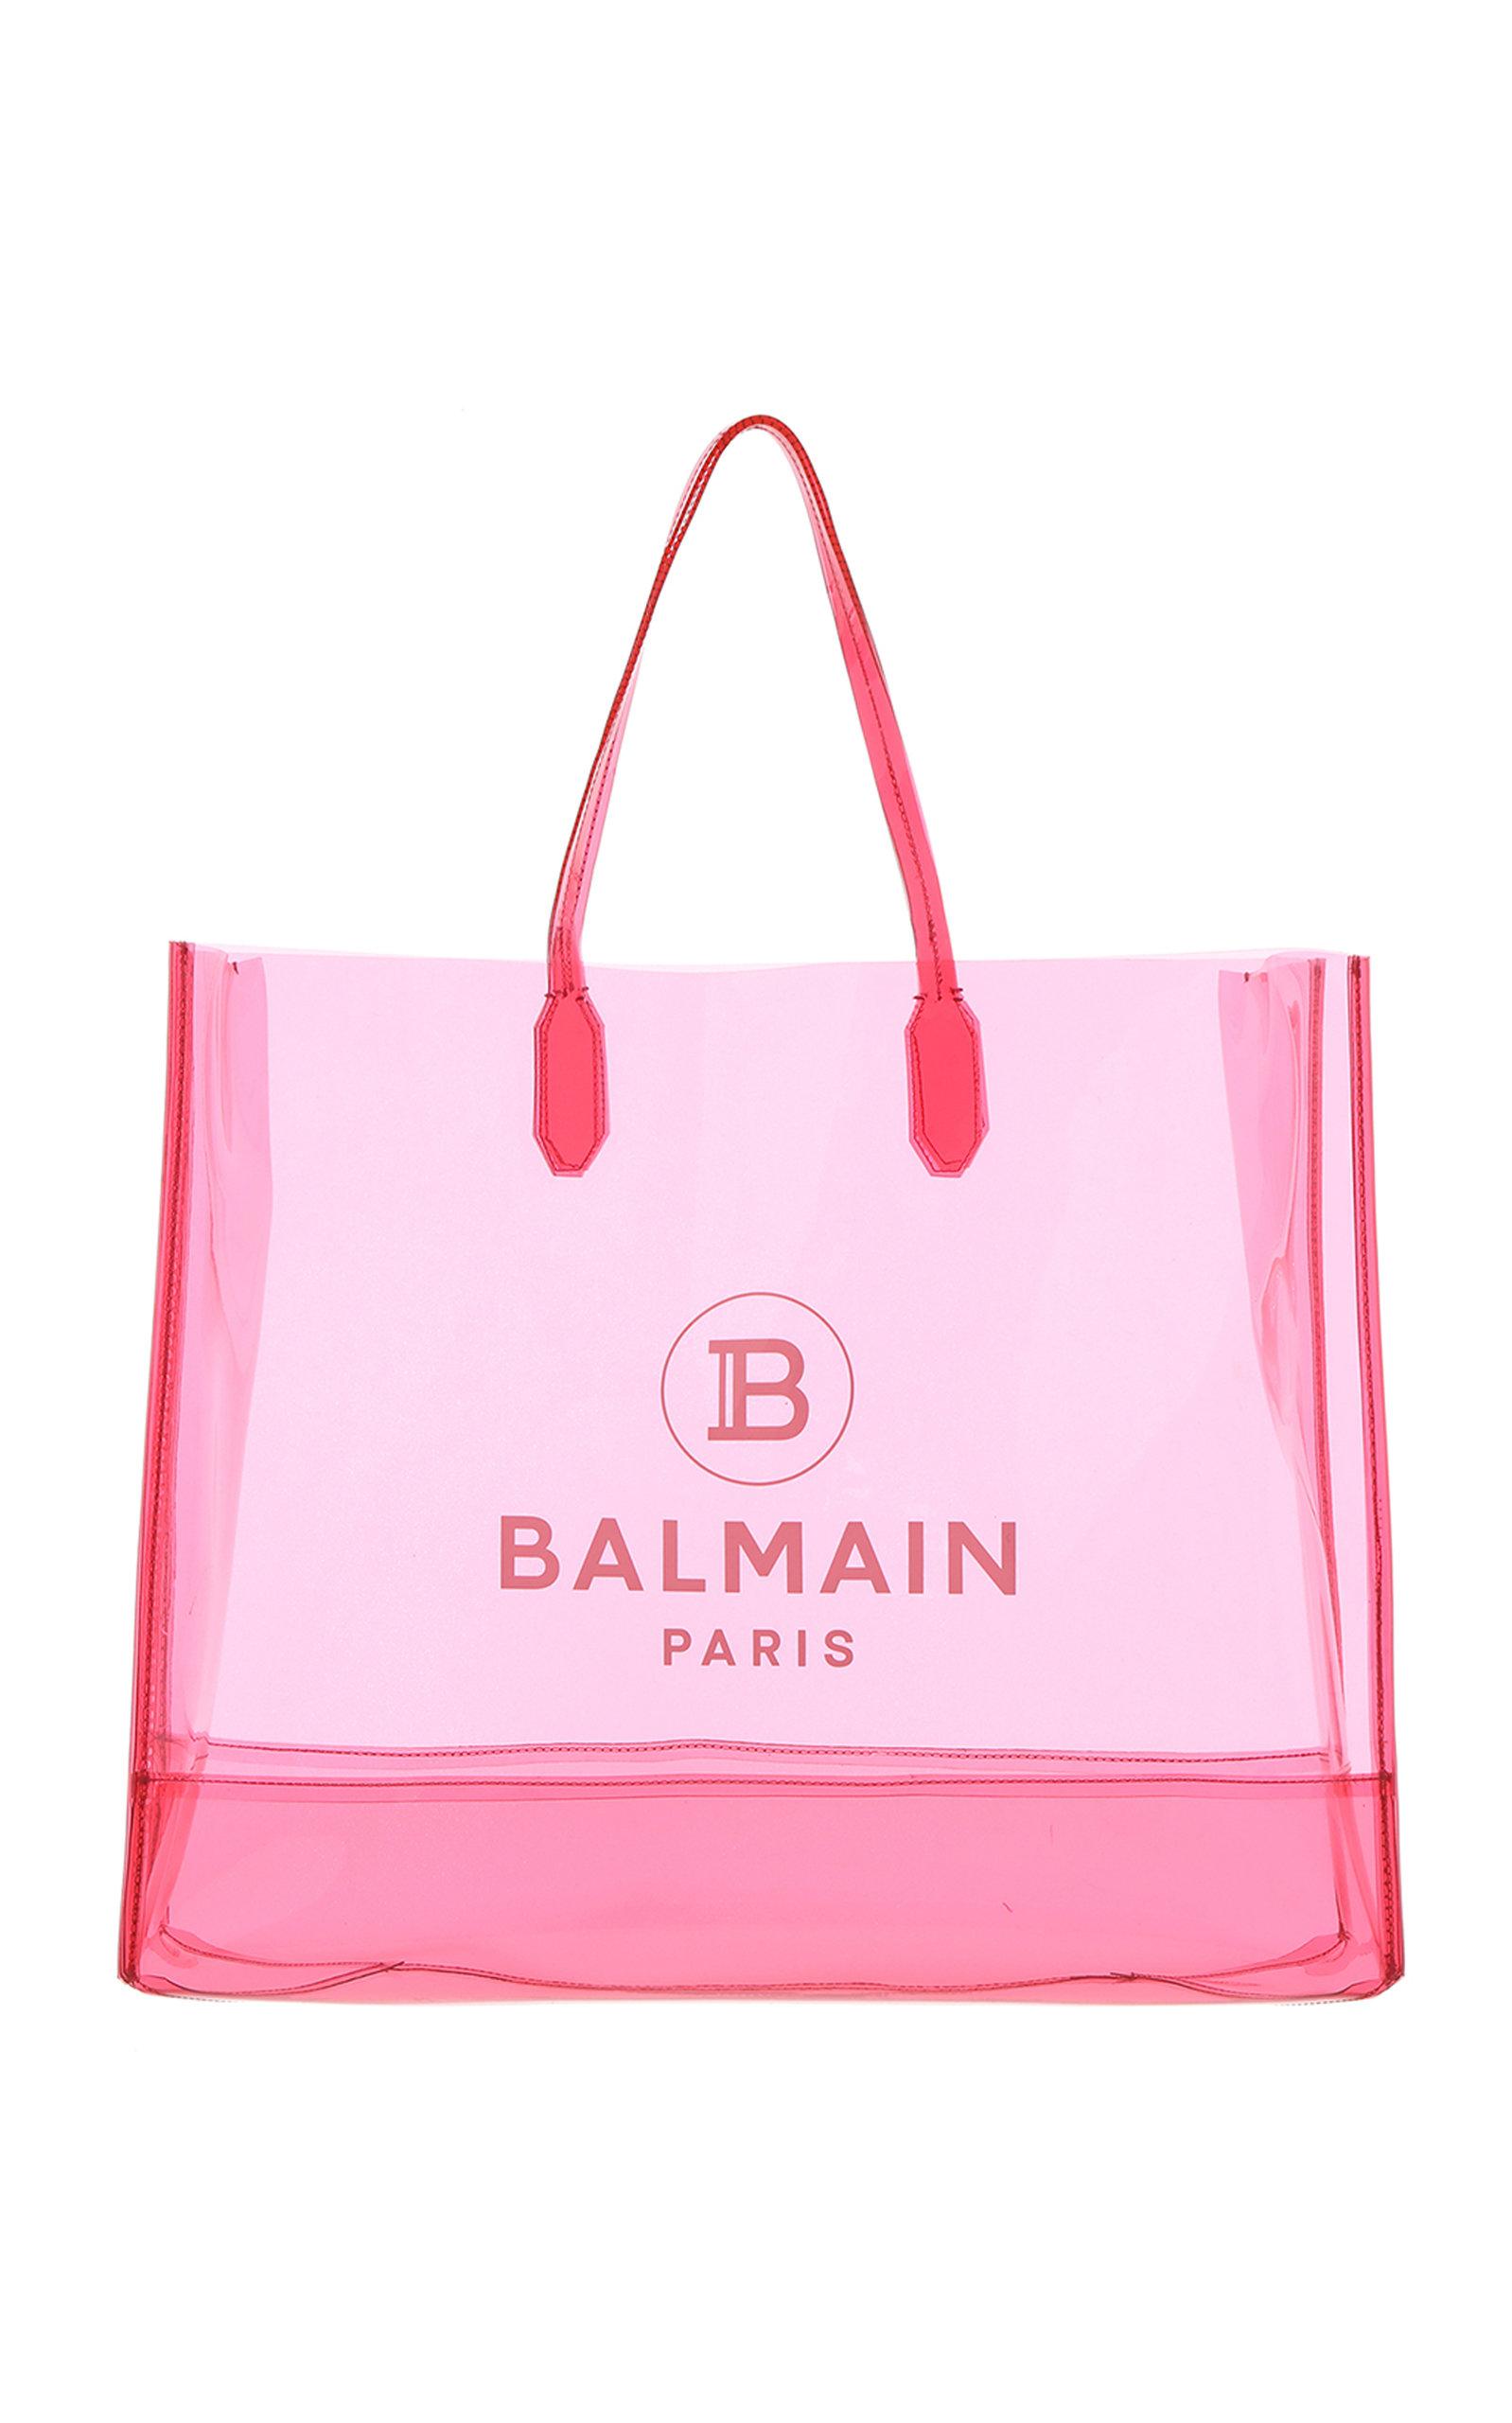 Balmain Pvc Shopping Bag in Pink | Lyst